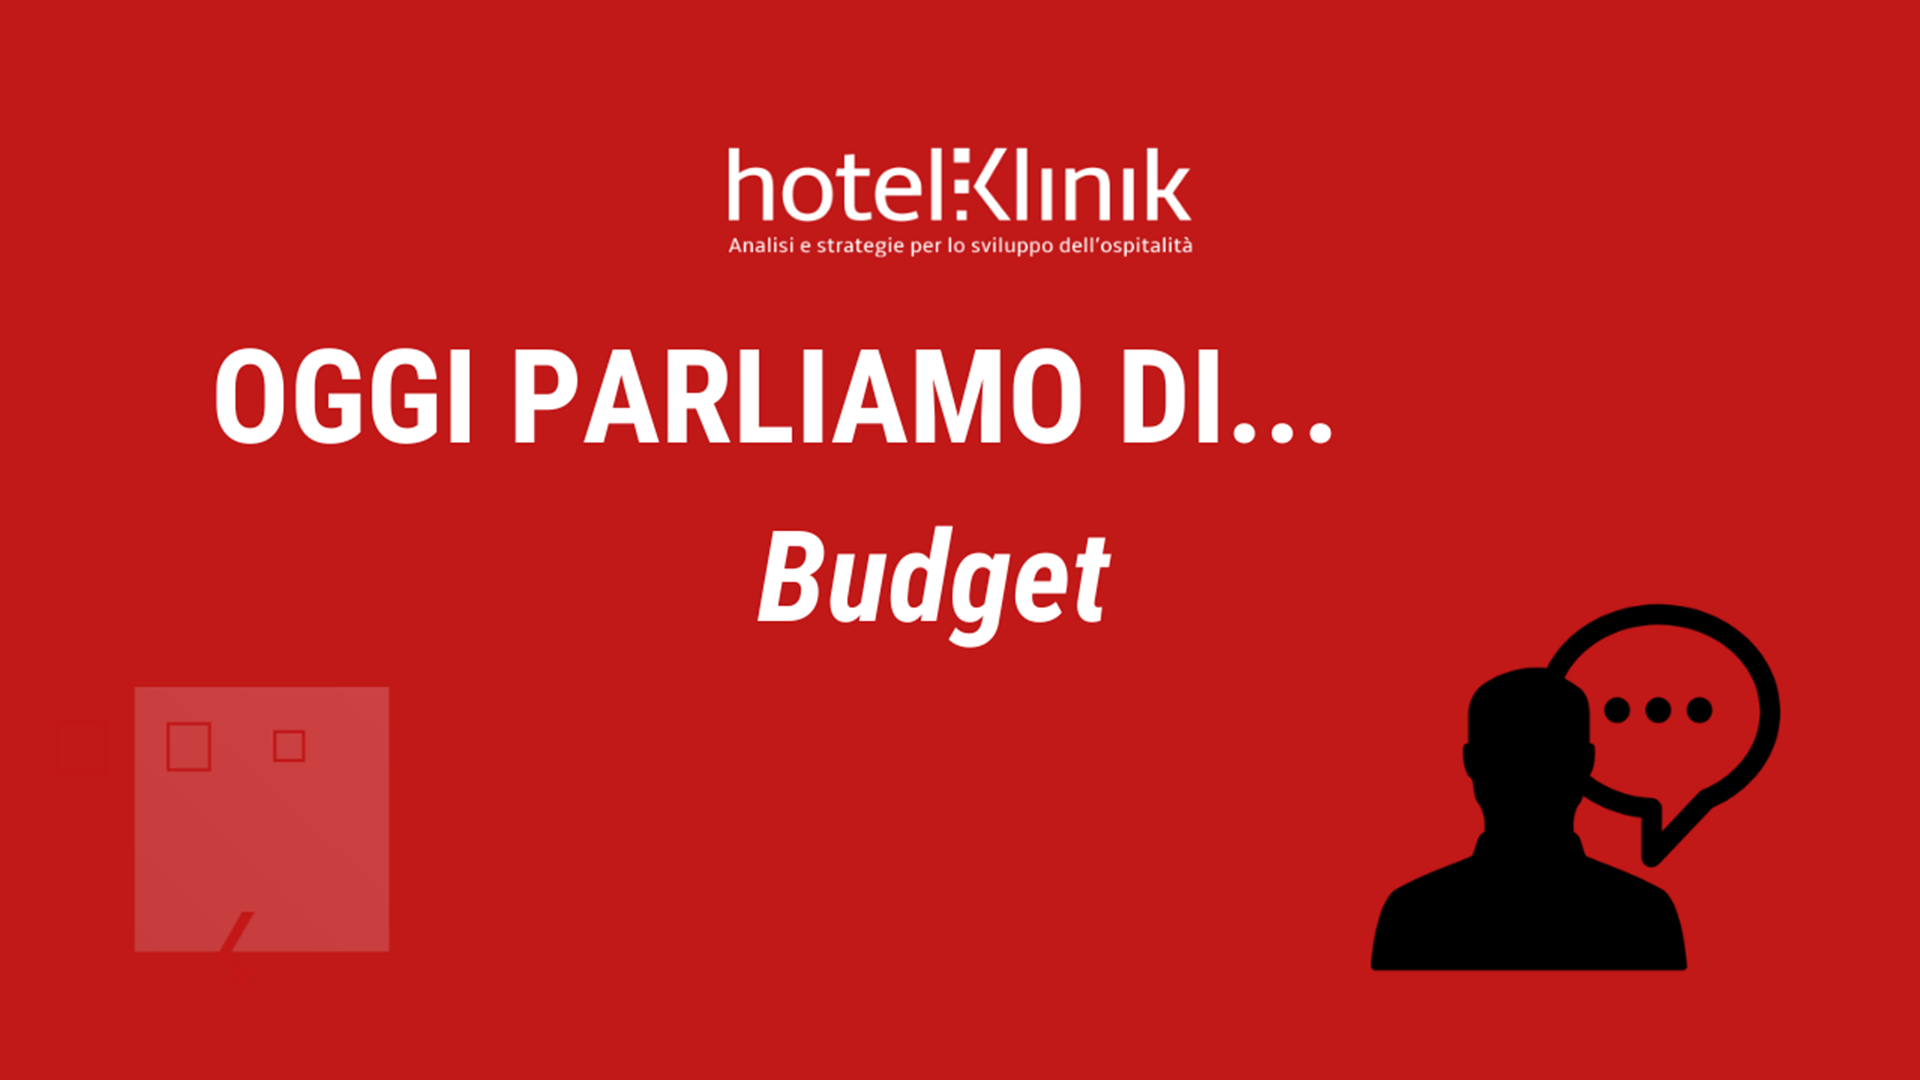 Oggi parliamo di... Budget